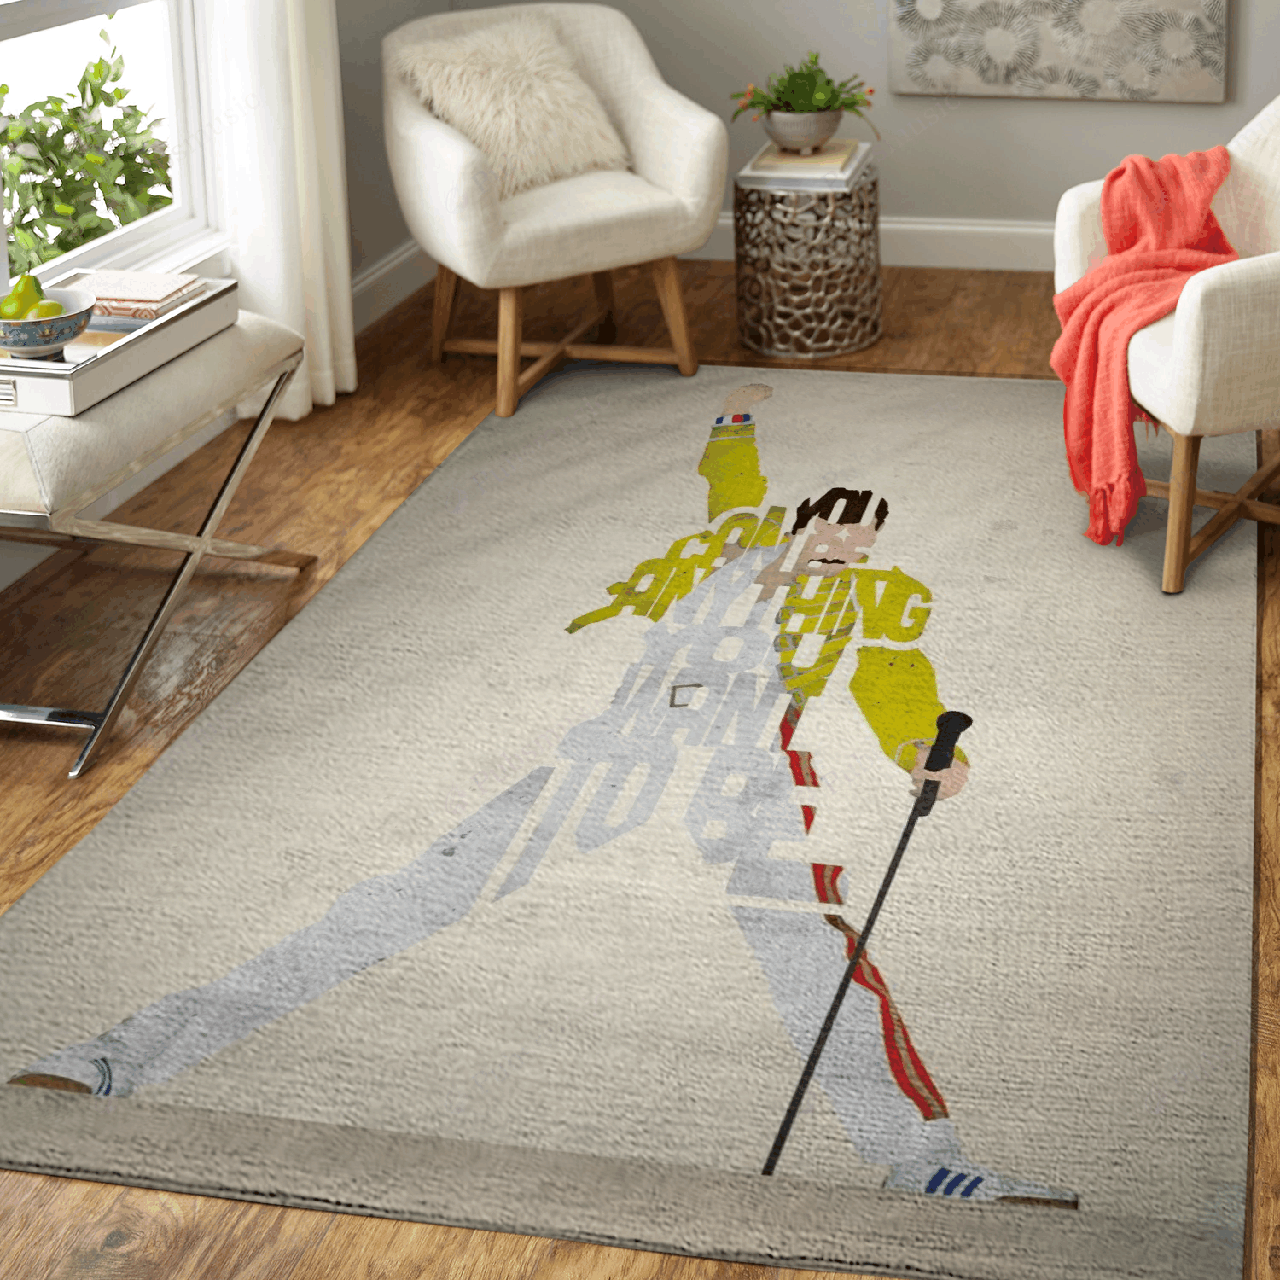 Freddie Mercury – Queen. – Music Artwork Art For Fans Area Rug Carpet